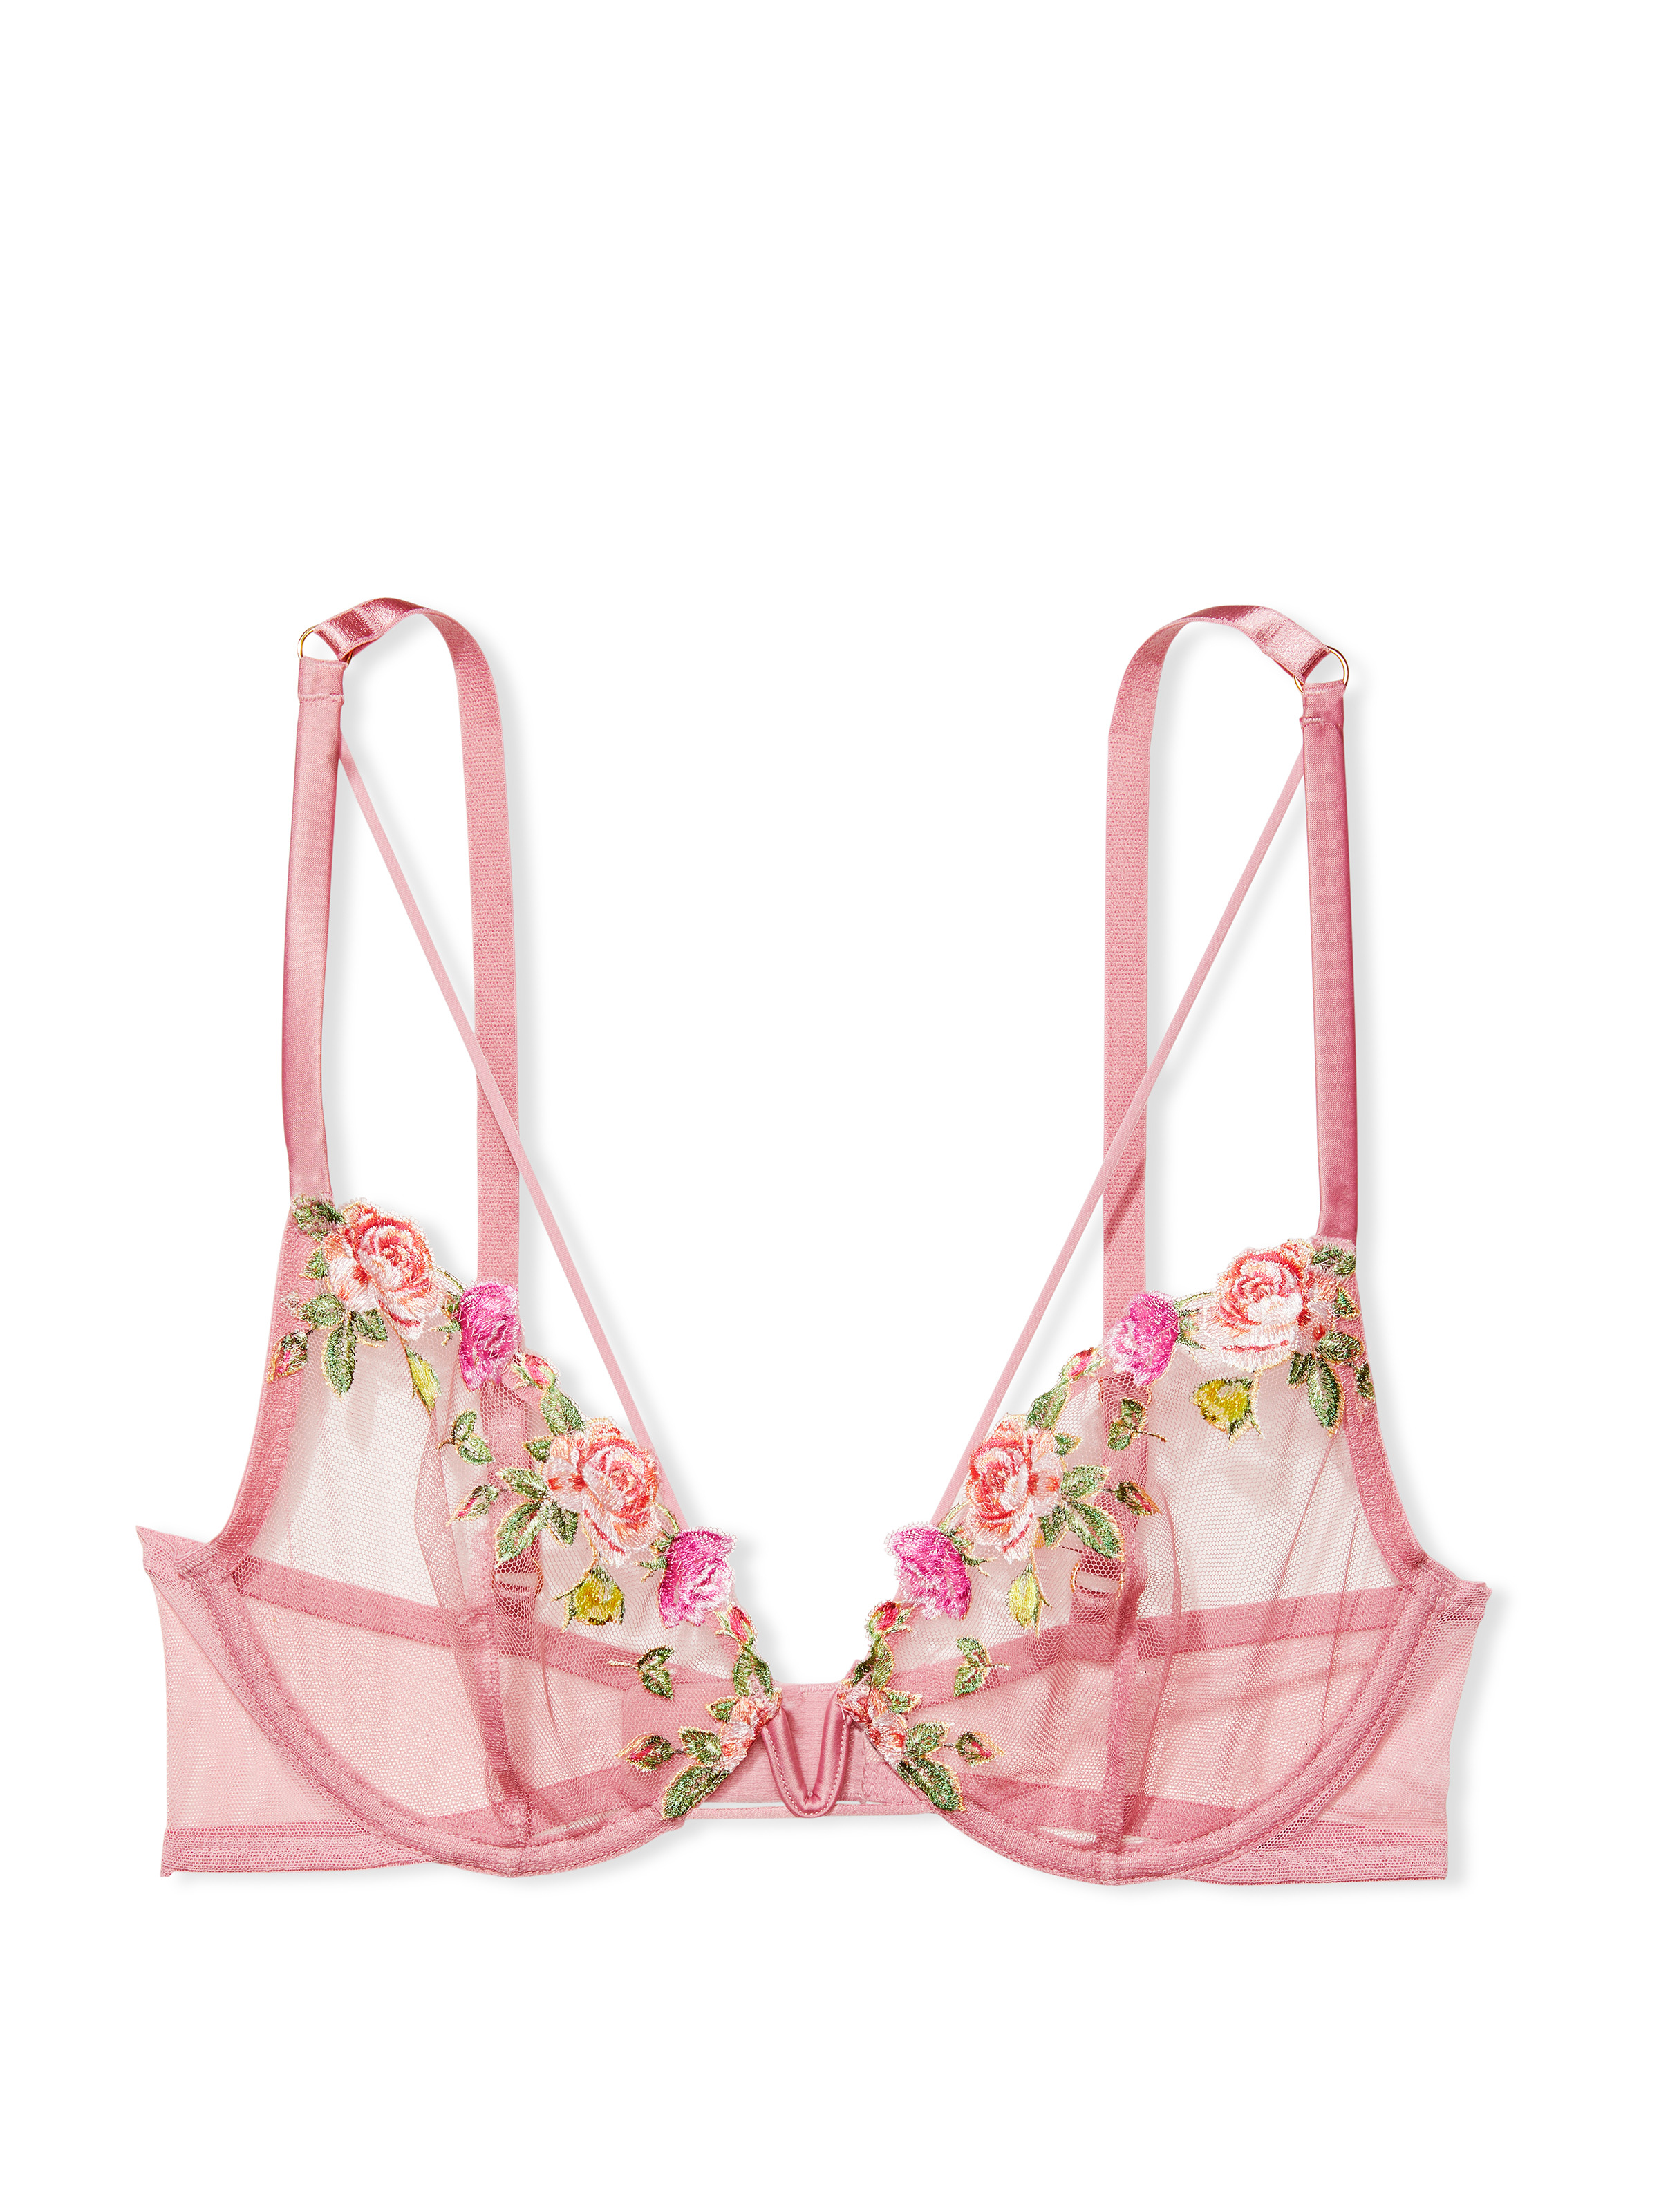 Victoria's Secret DREAM ANGELS Unlined Heart Embroidery Demi Bra Thong Set  